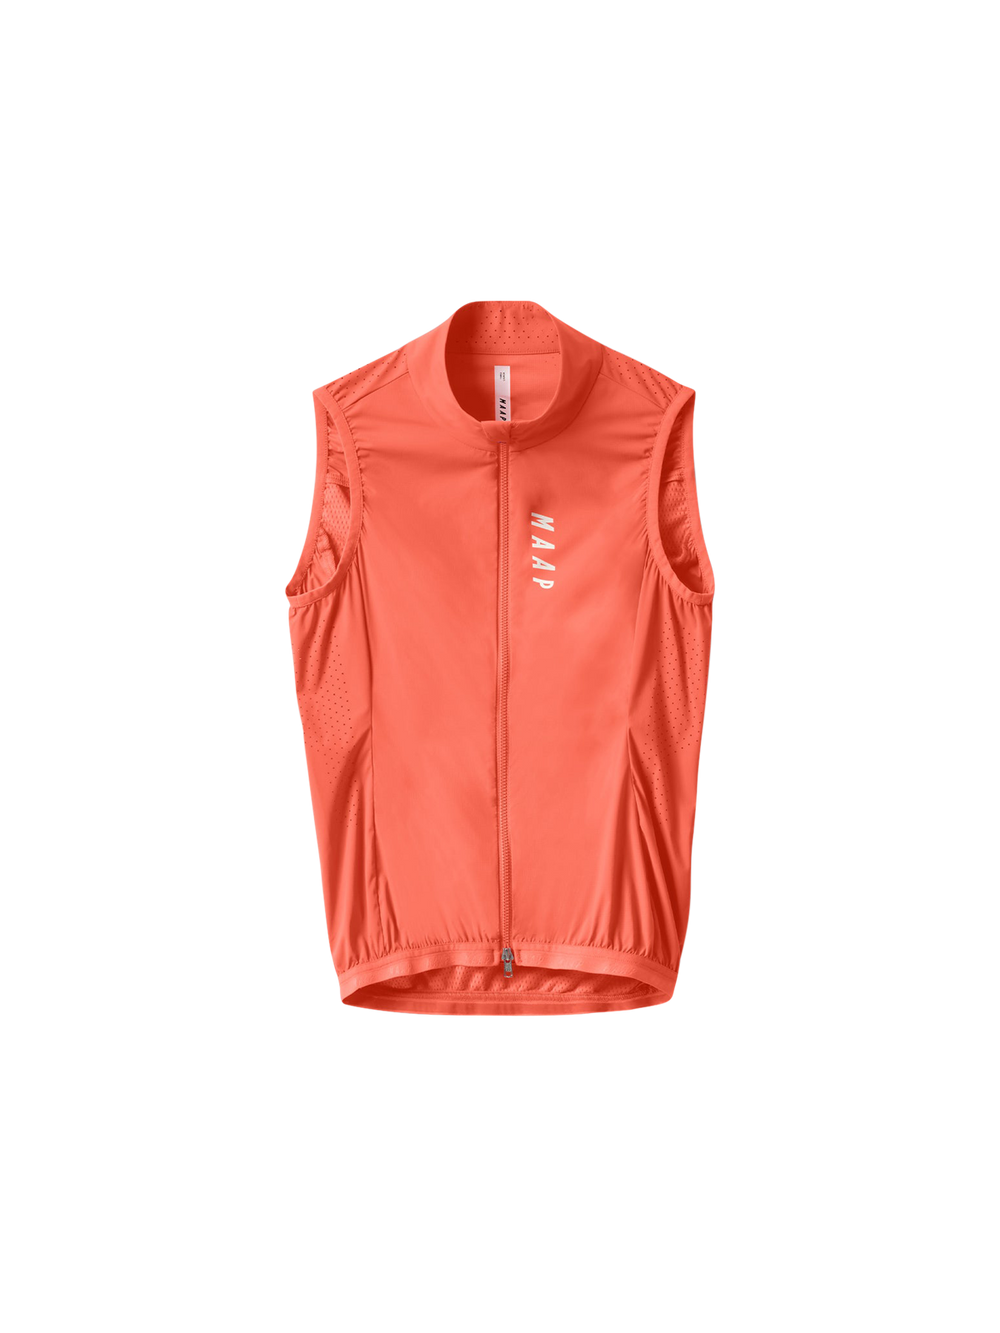 Product Image for Women's Draft Team Vest